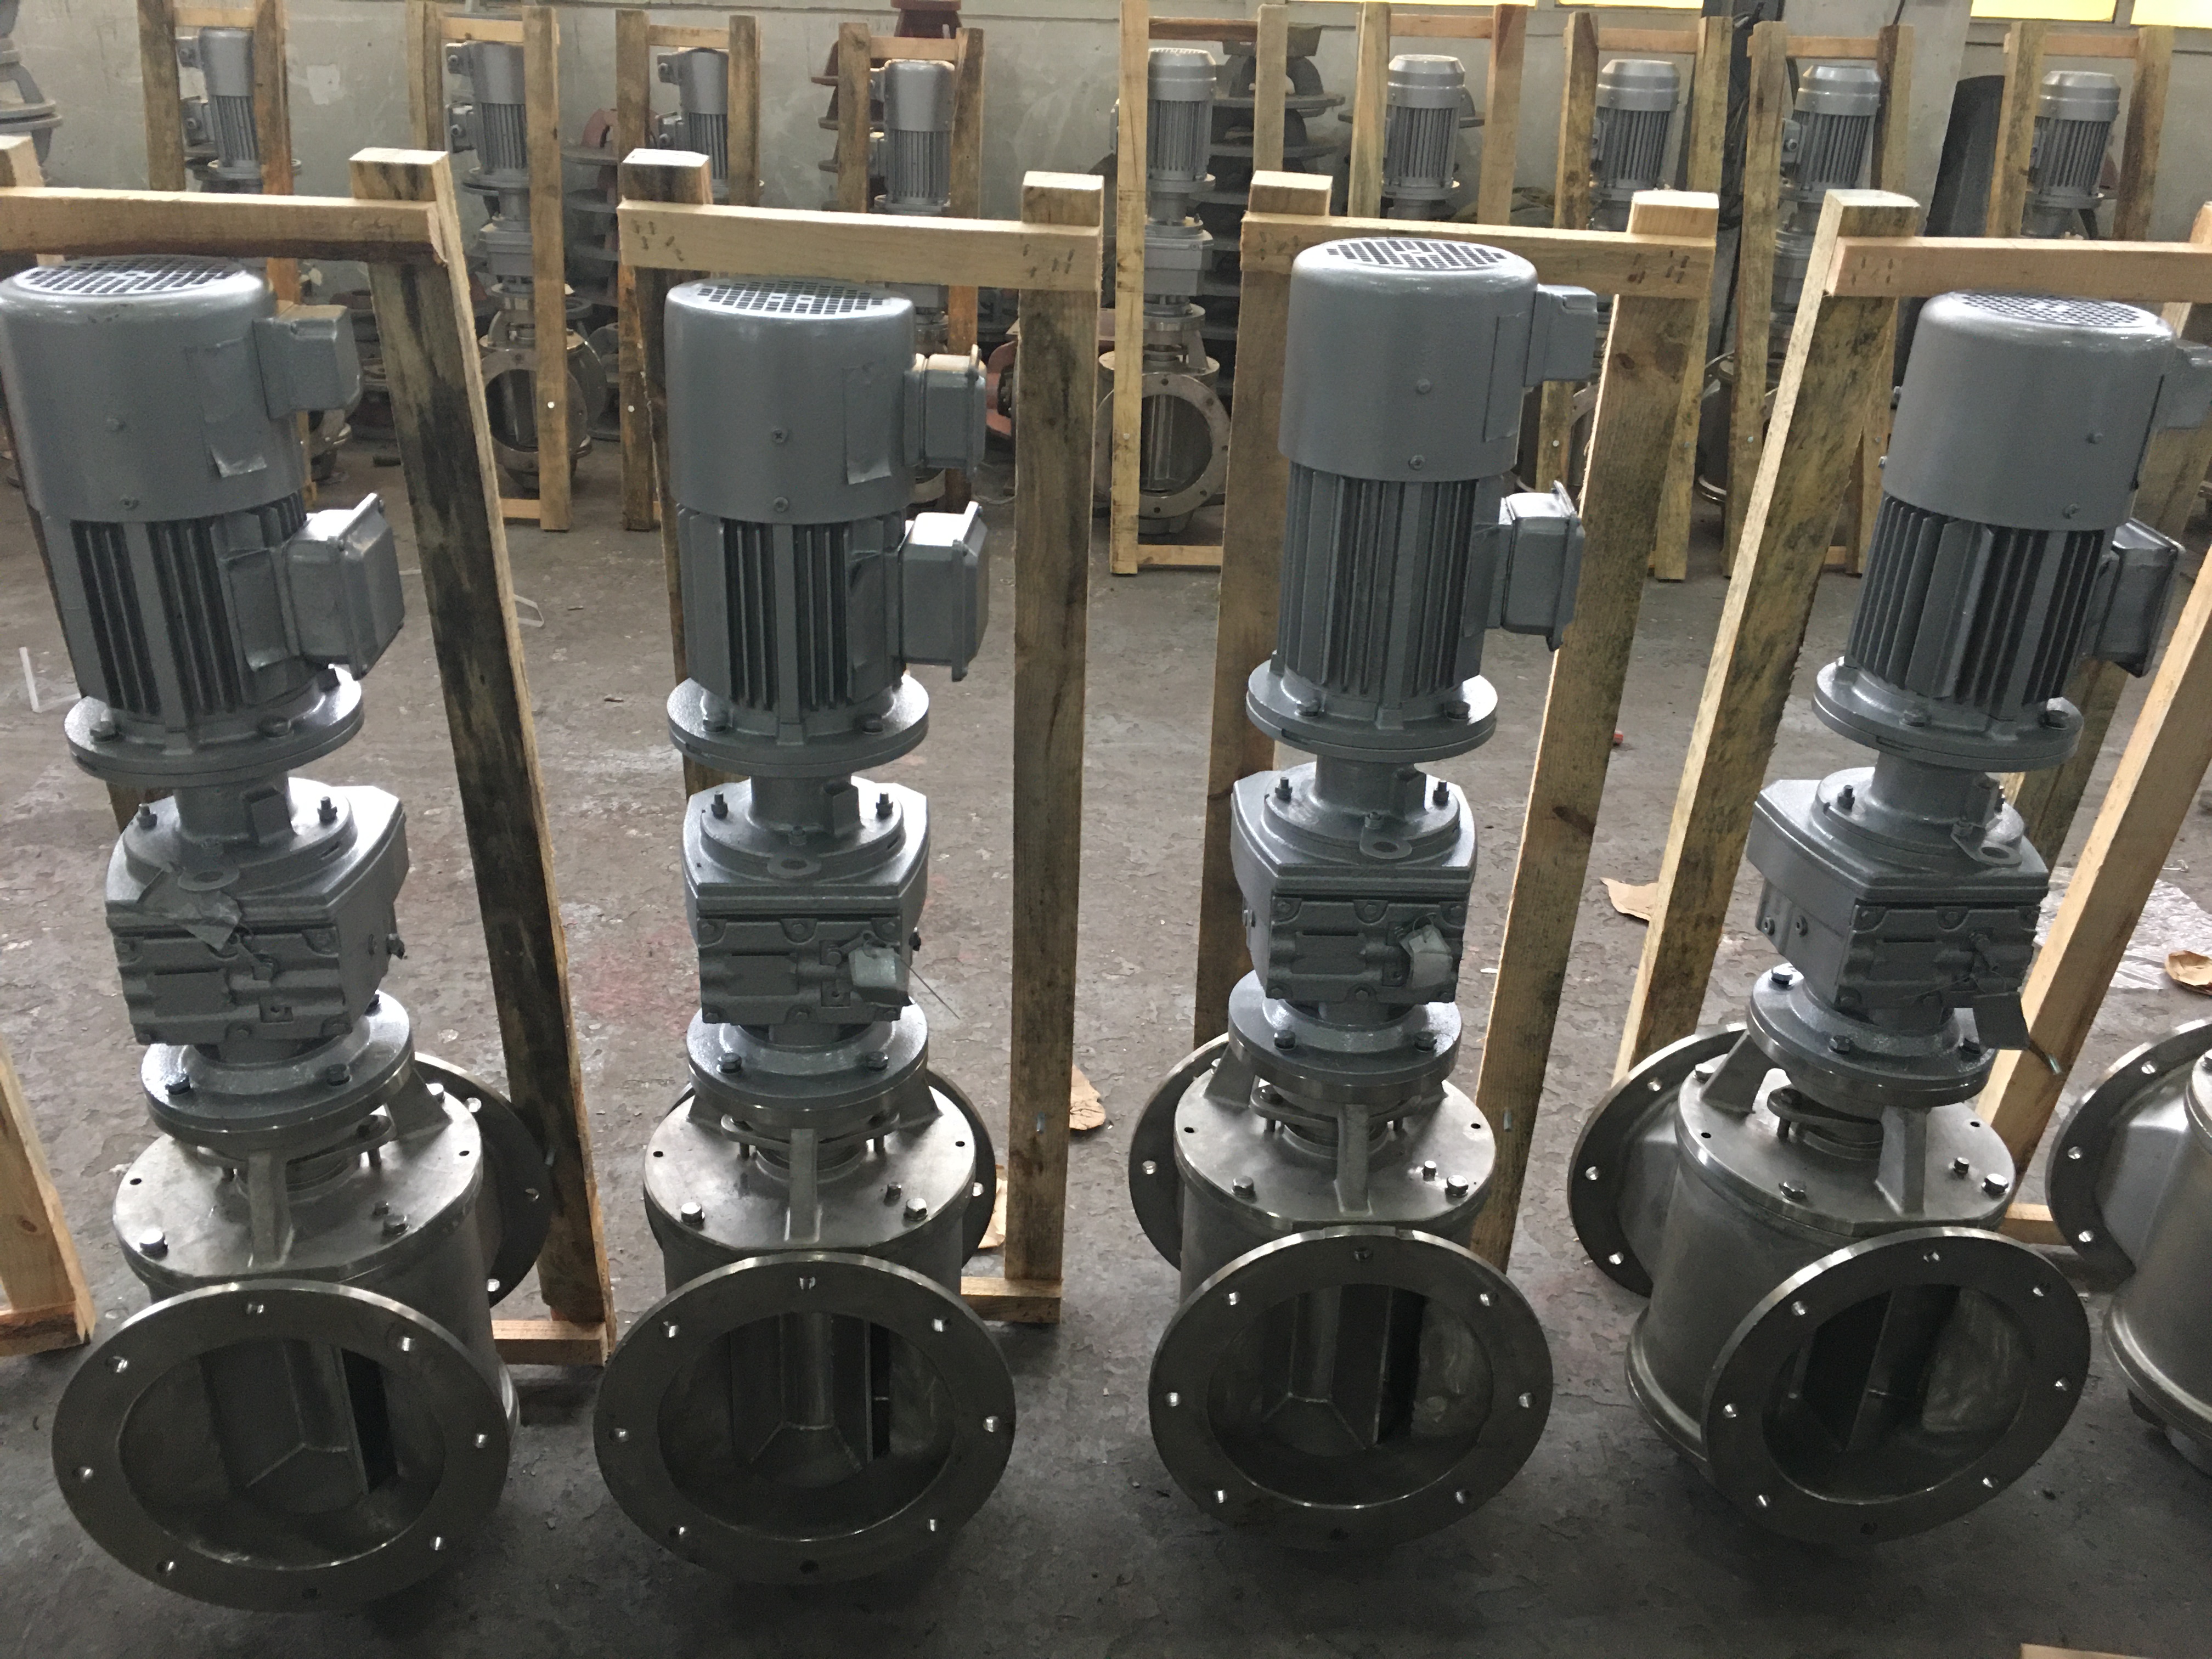 Industrial airlock granular discharge rotary feeder valve